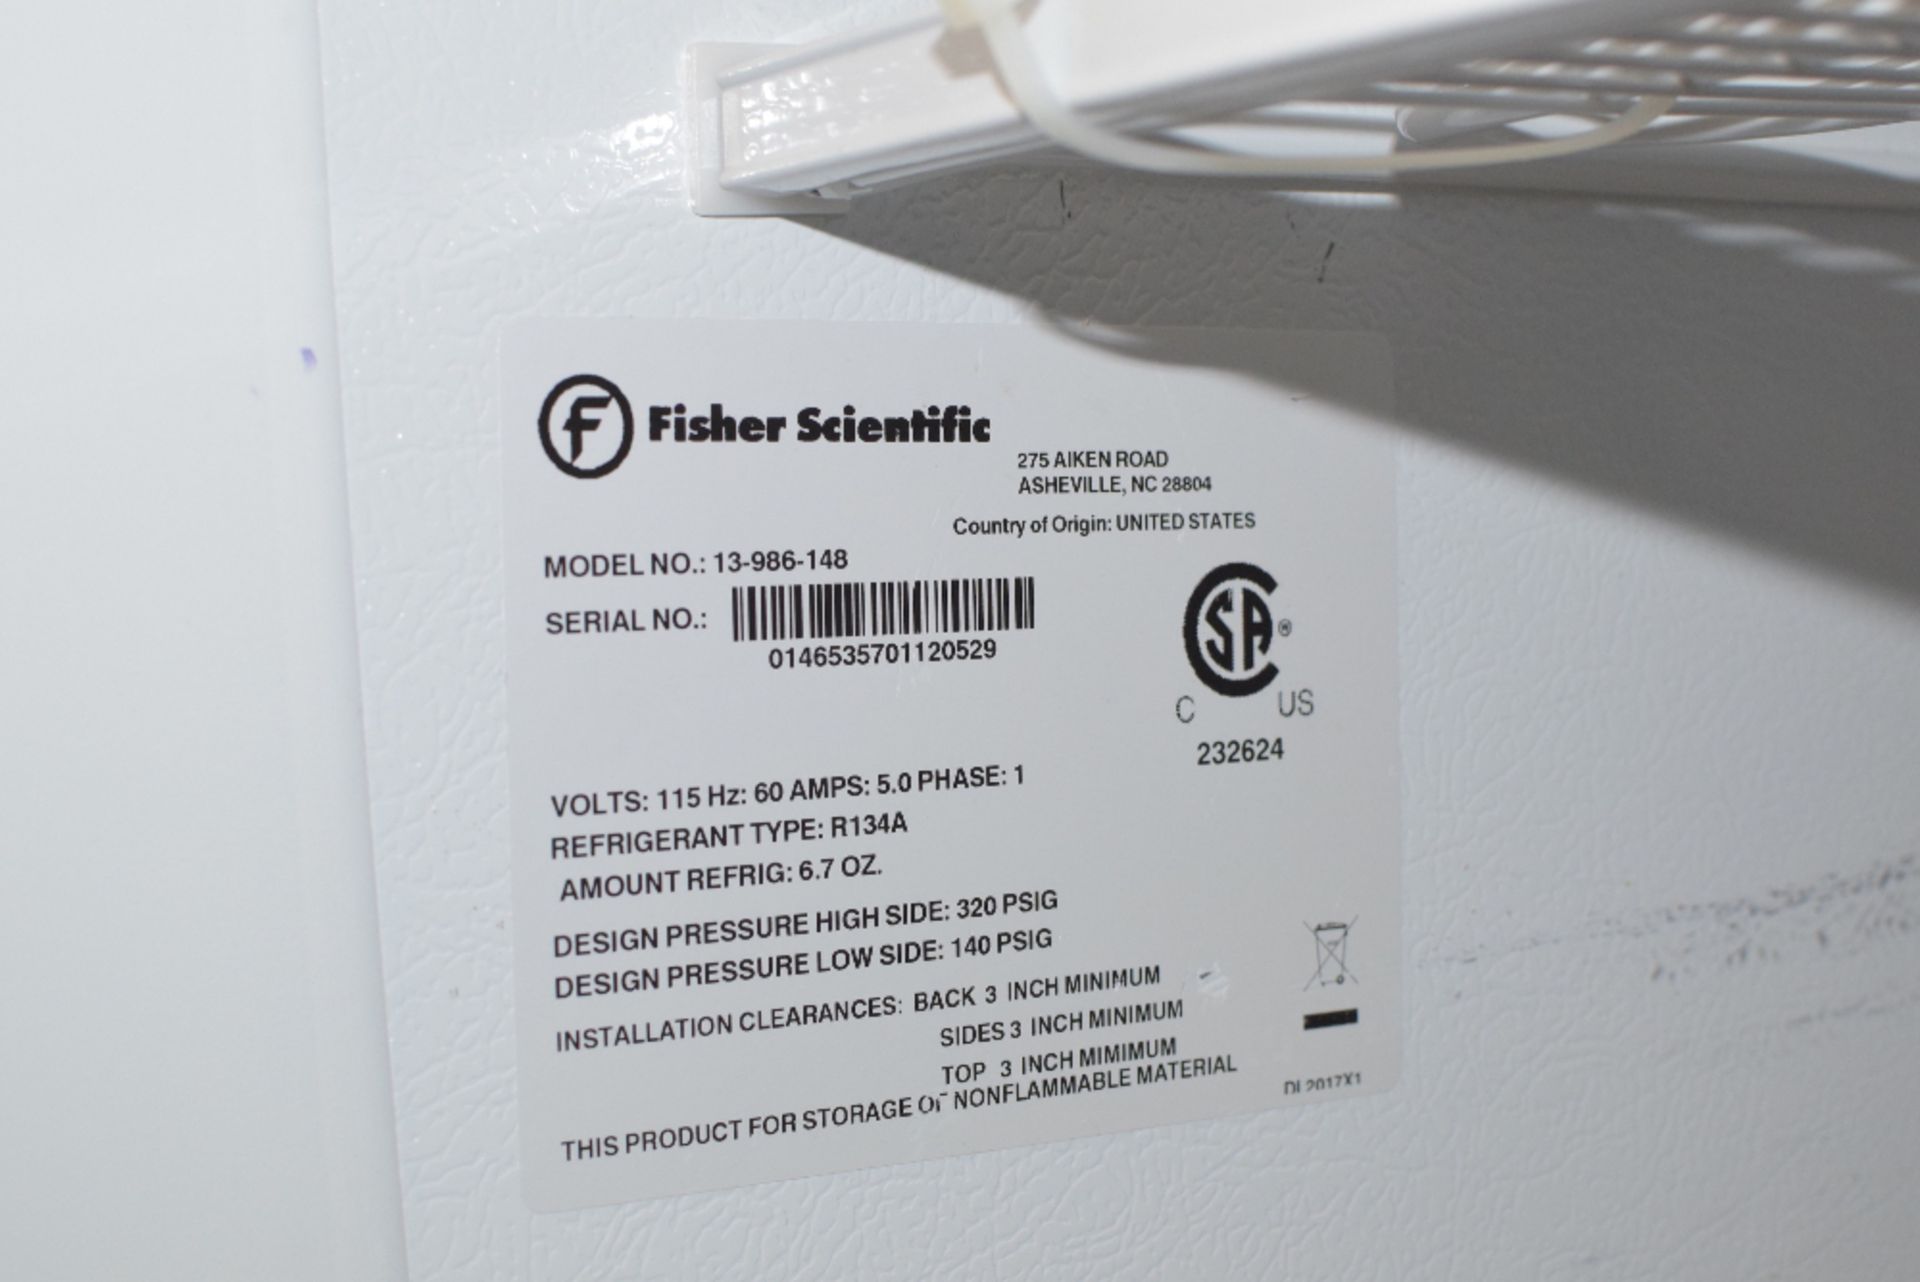 Fisher Scientific 13-986-148 Laboratory Freezer - Image 3 of 3